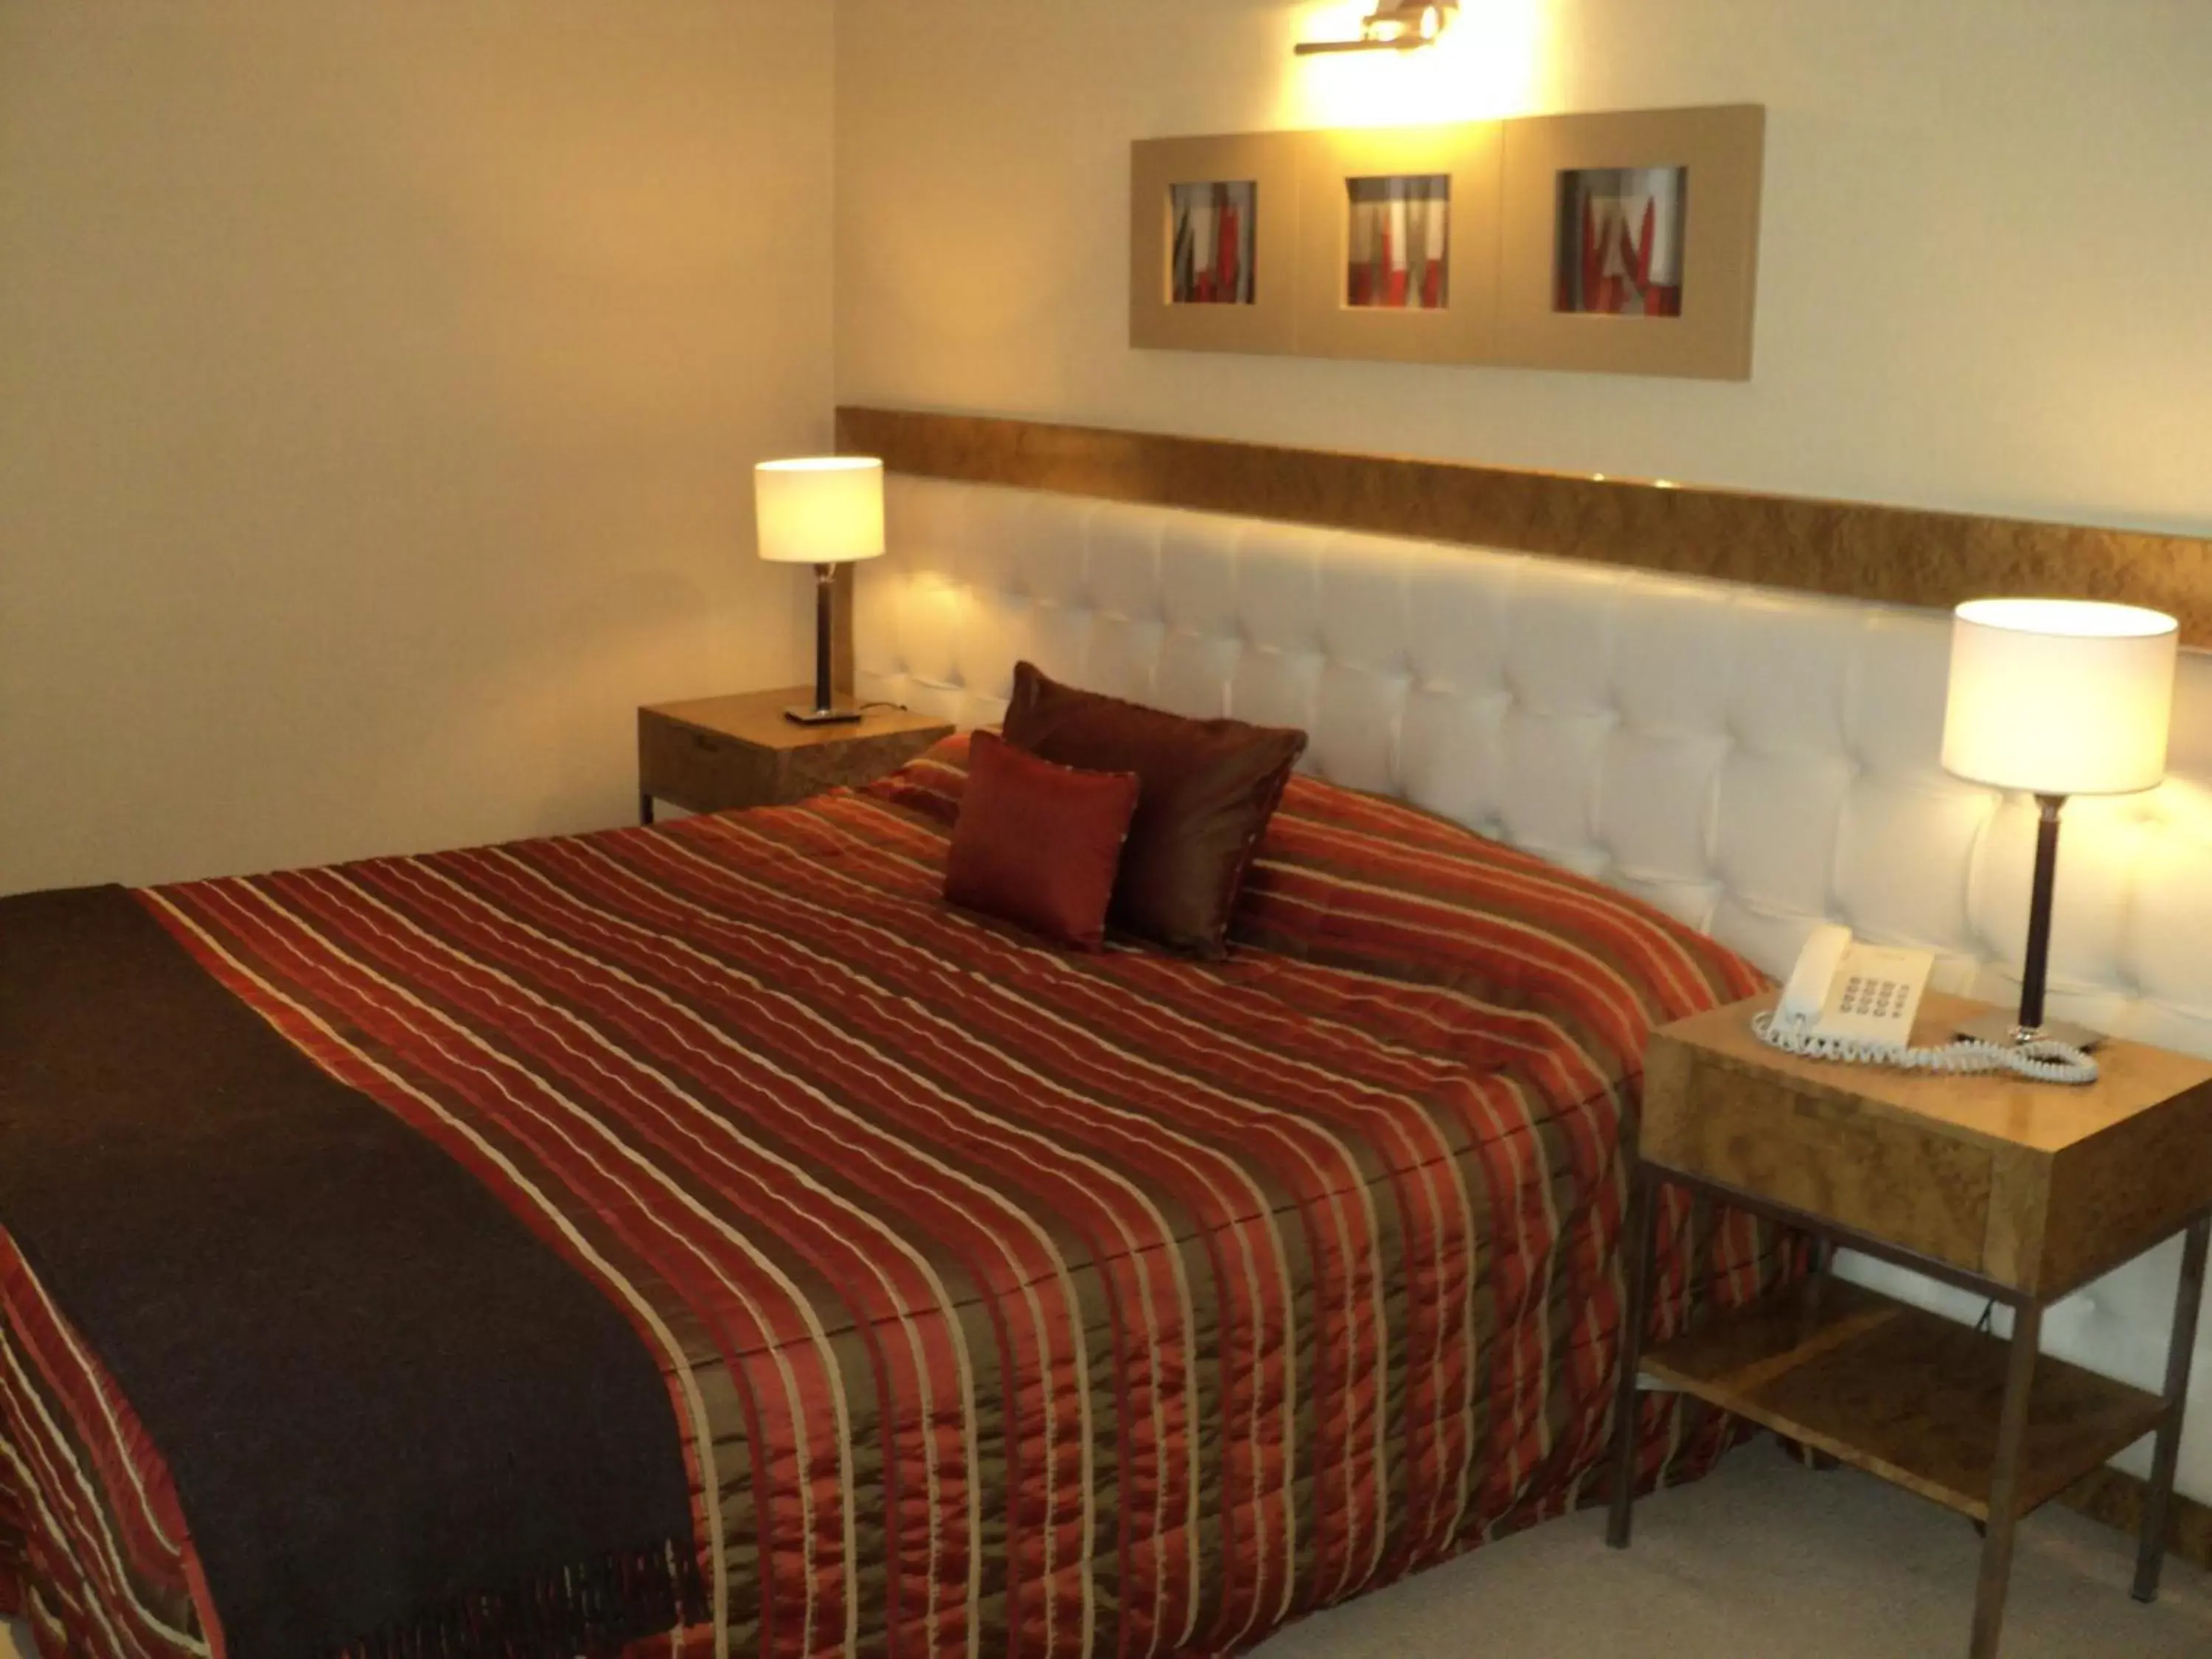 Bed, Room Photo in Fueguino Hotel